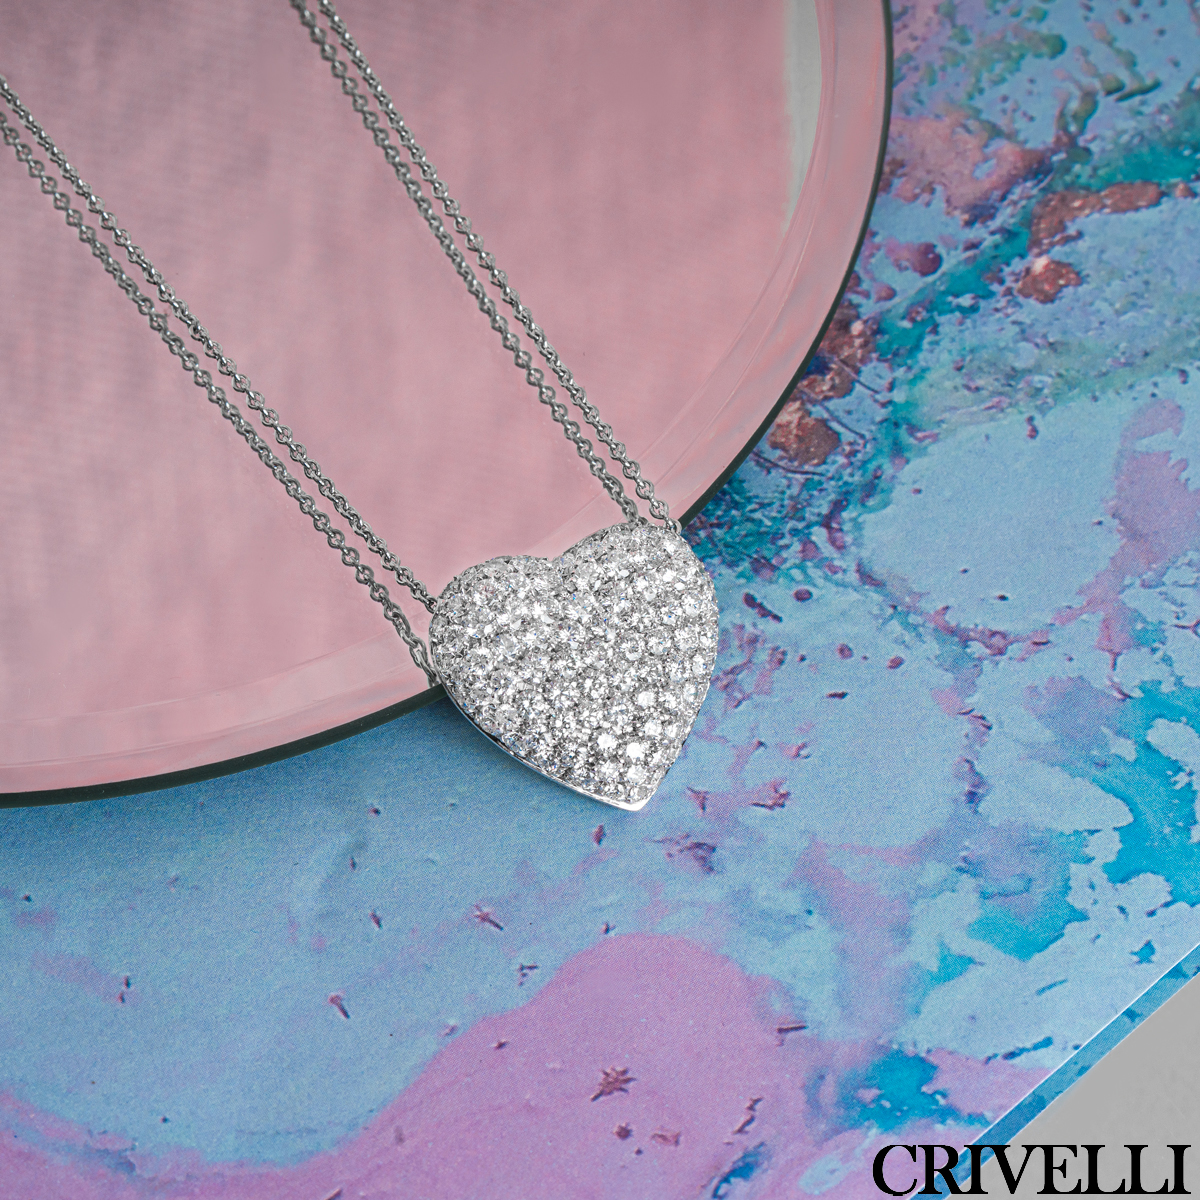 Crivellli White Gold Diamond Heart Pendant 2.34ct